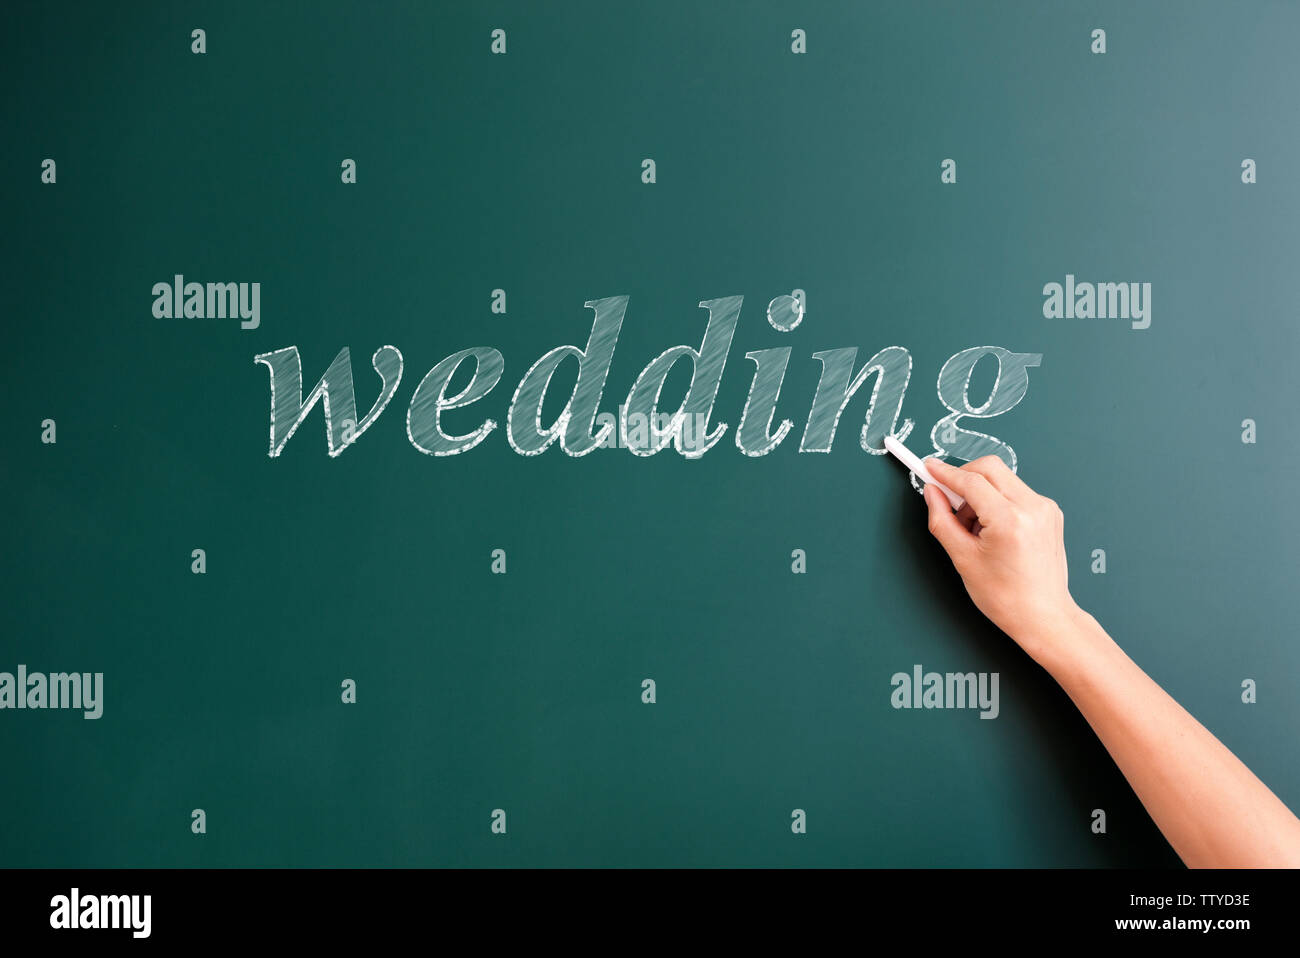 wedding written on blackboard Stock Photo